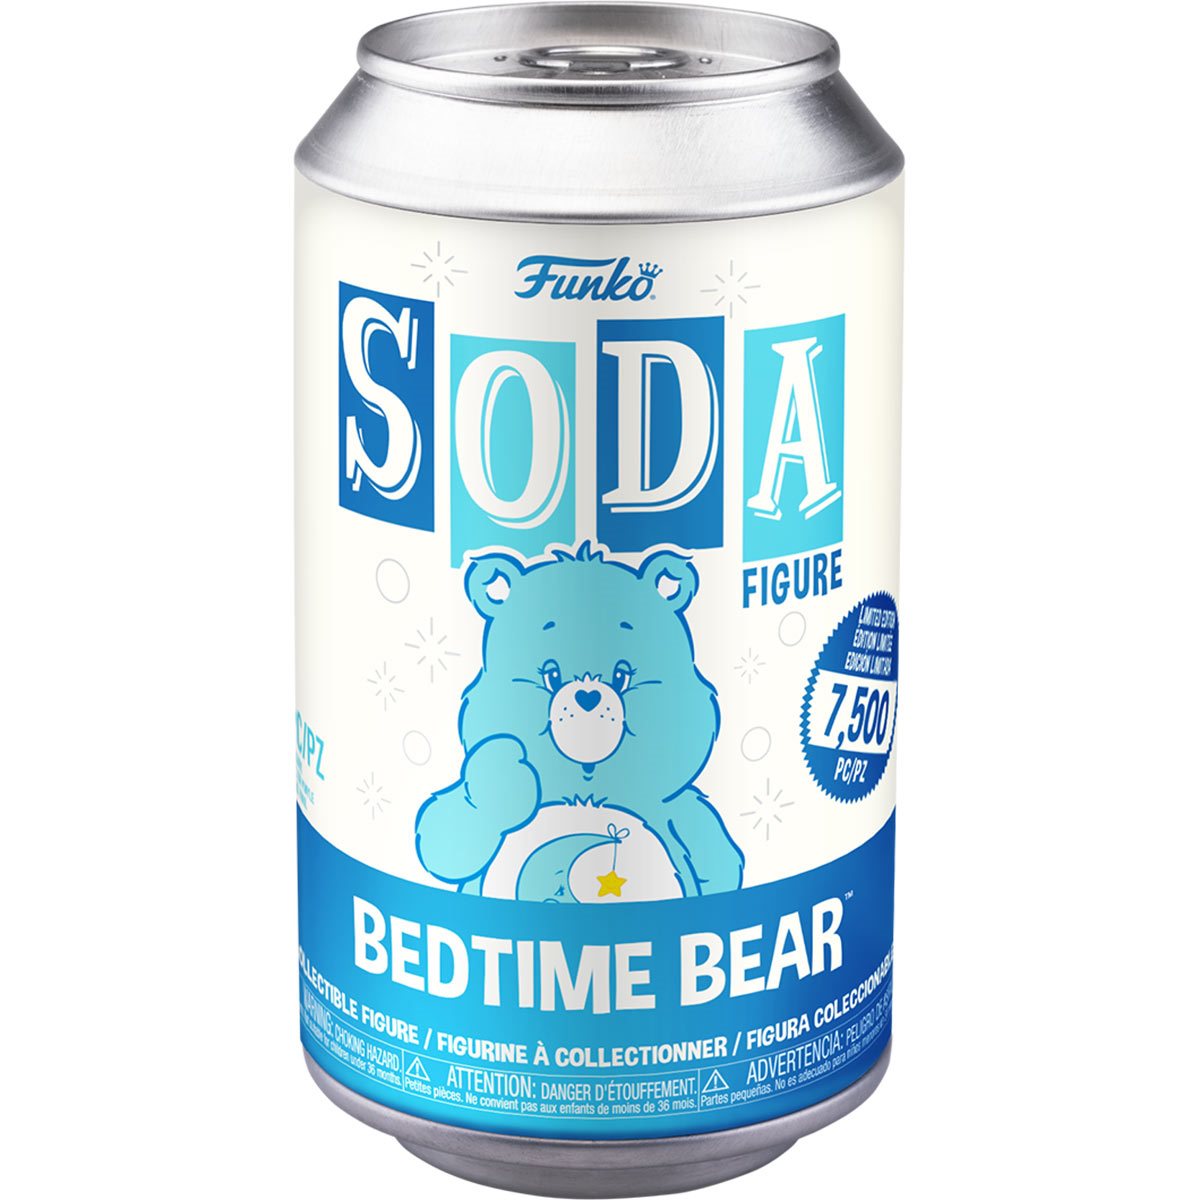 Care Bears Bedtime Bear Funko Vinyl Soda Chance of chase!